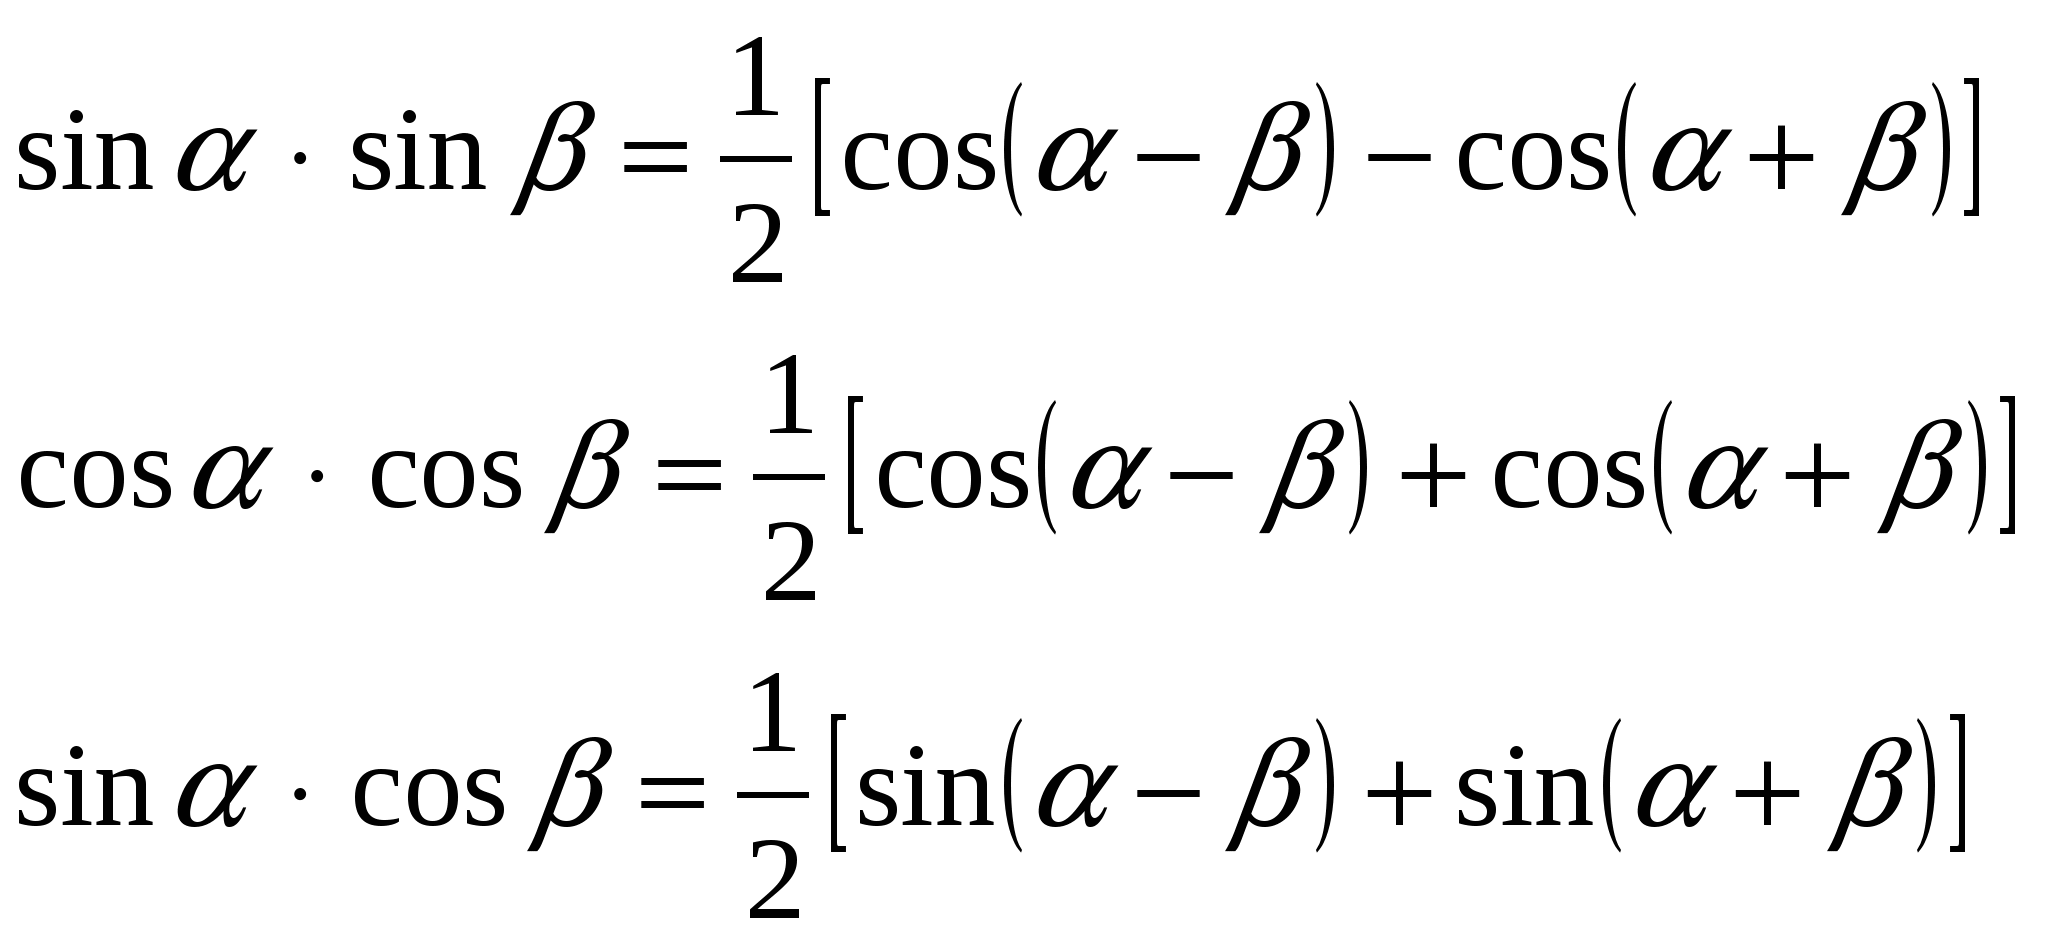 Формулы умножения синусов и косинусов. Формула умножения косинусов. Произведение синусов и косинусов формулы. Формула умножения синусов. Сумма тангенсов равна произведению тангенсов